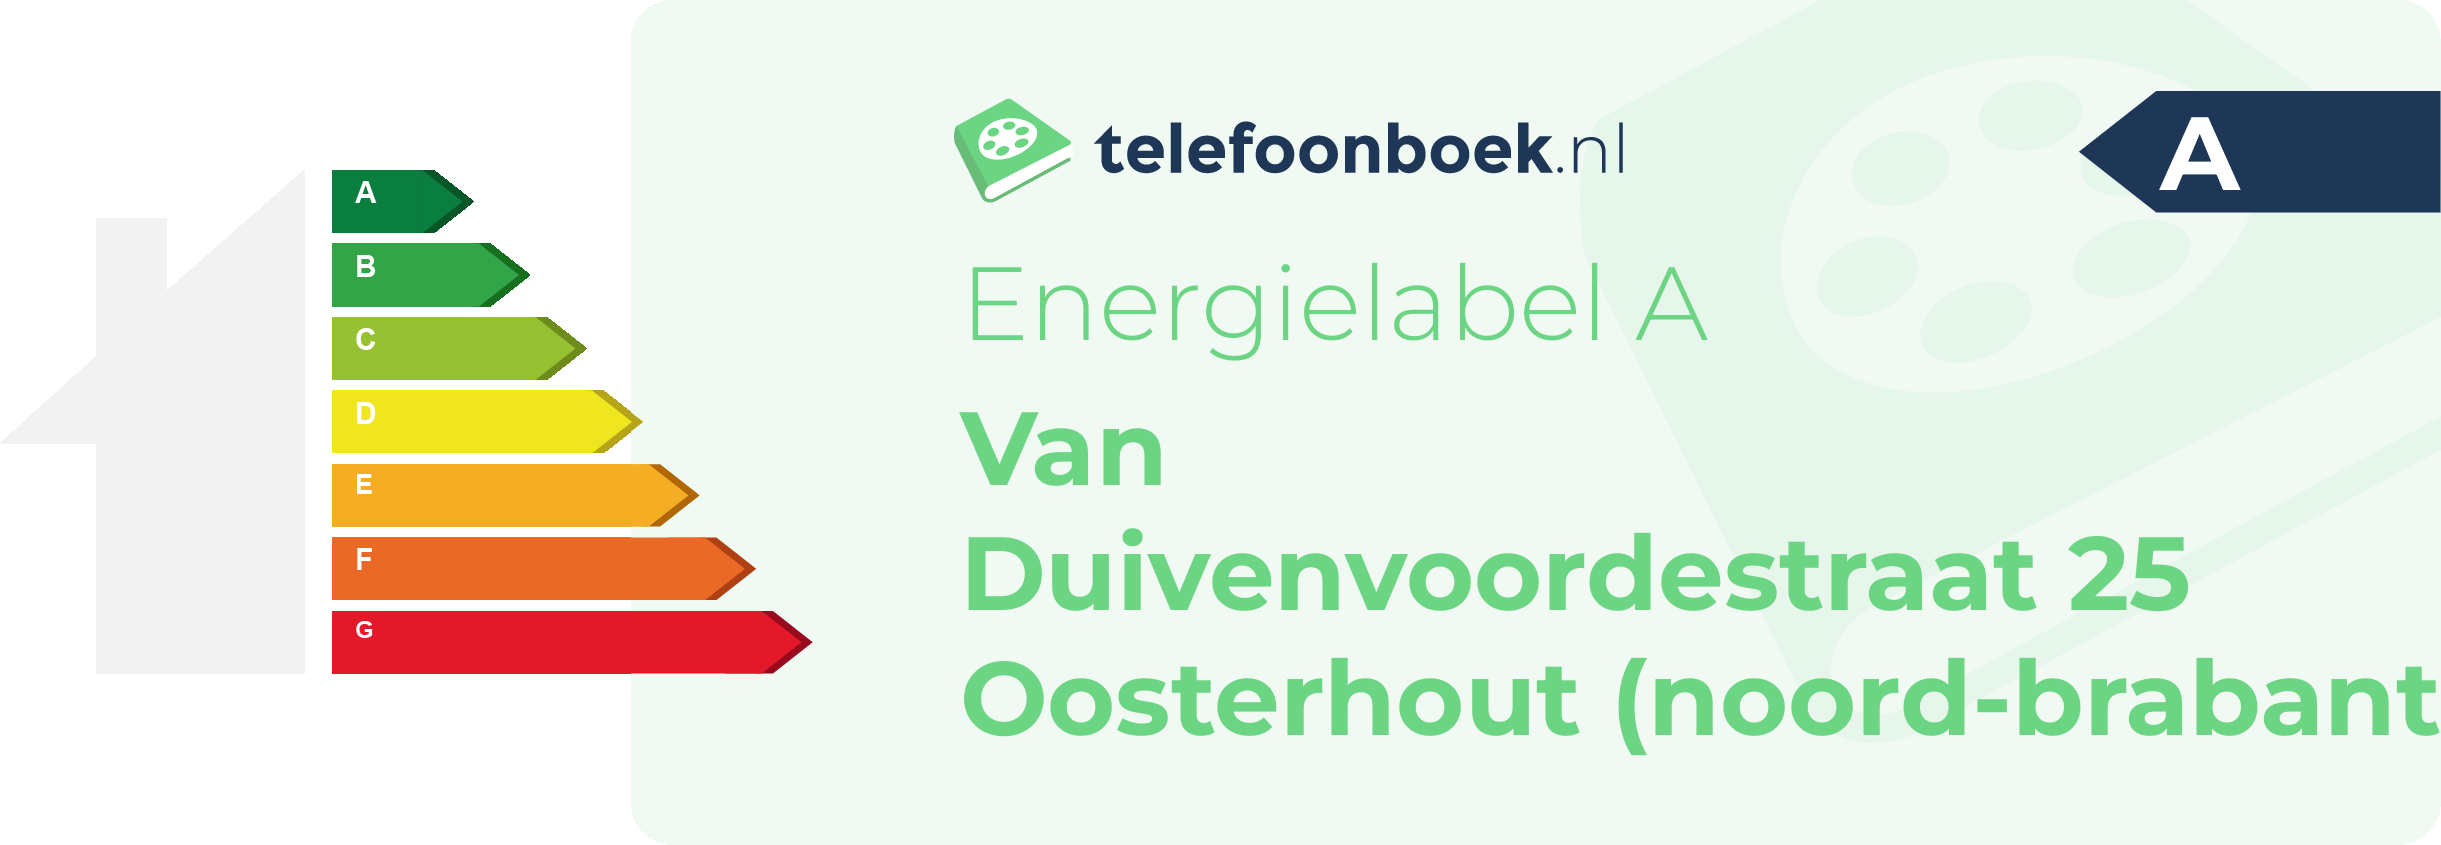 Energielabel Van Duivenvoordestraat 25 Oosterhout (Noord-Brabant)